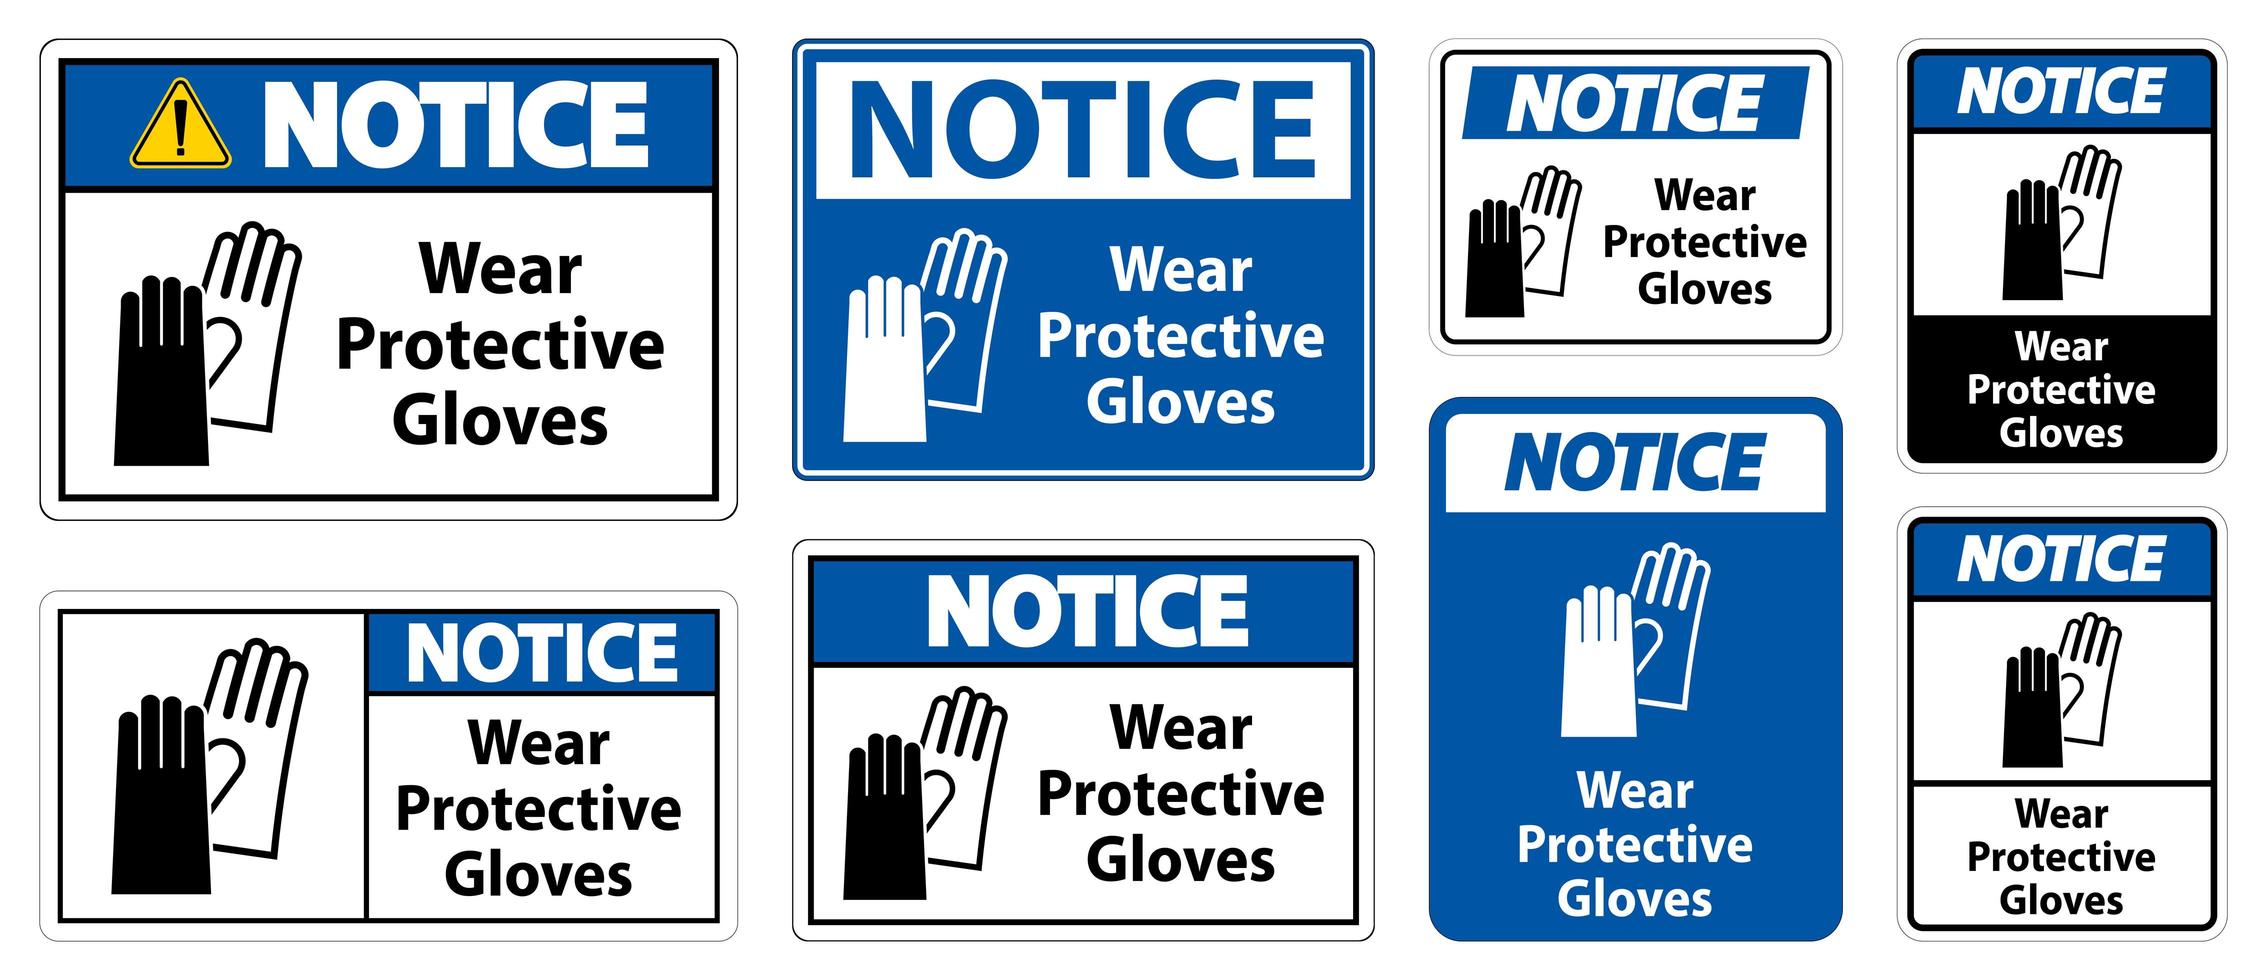 usar guantes protectores firmar vector